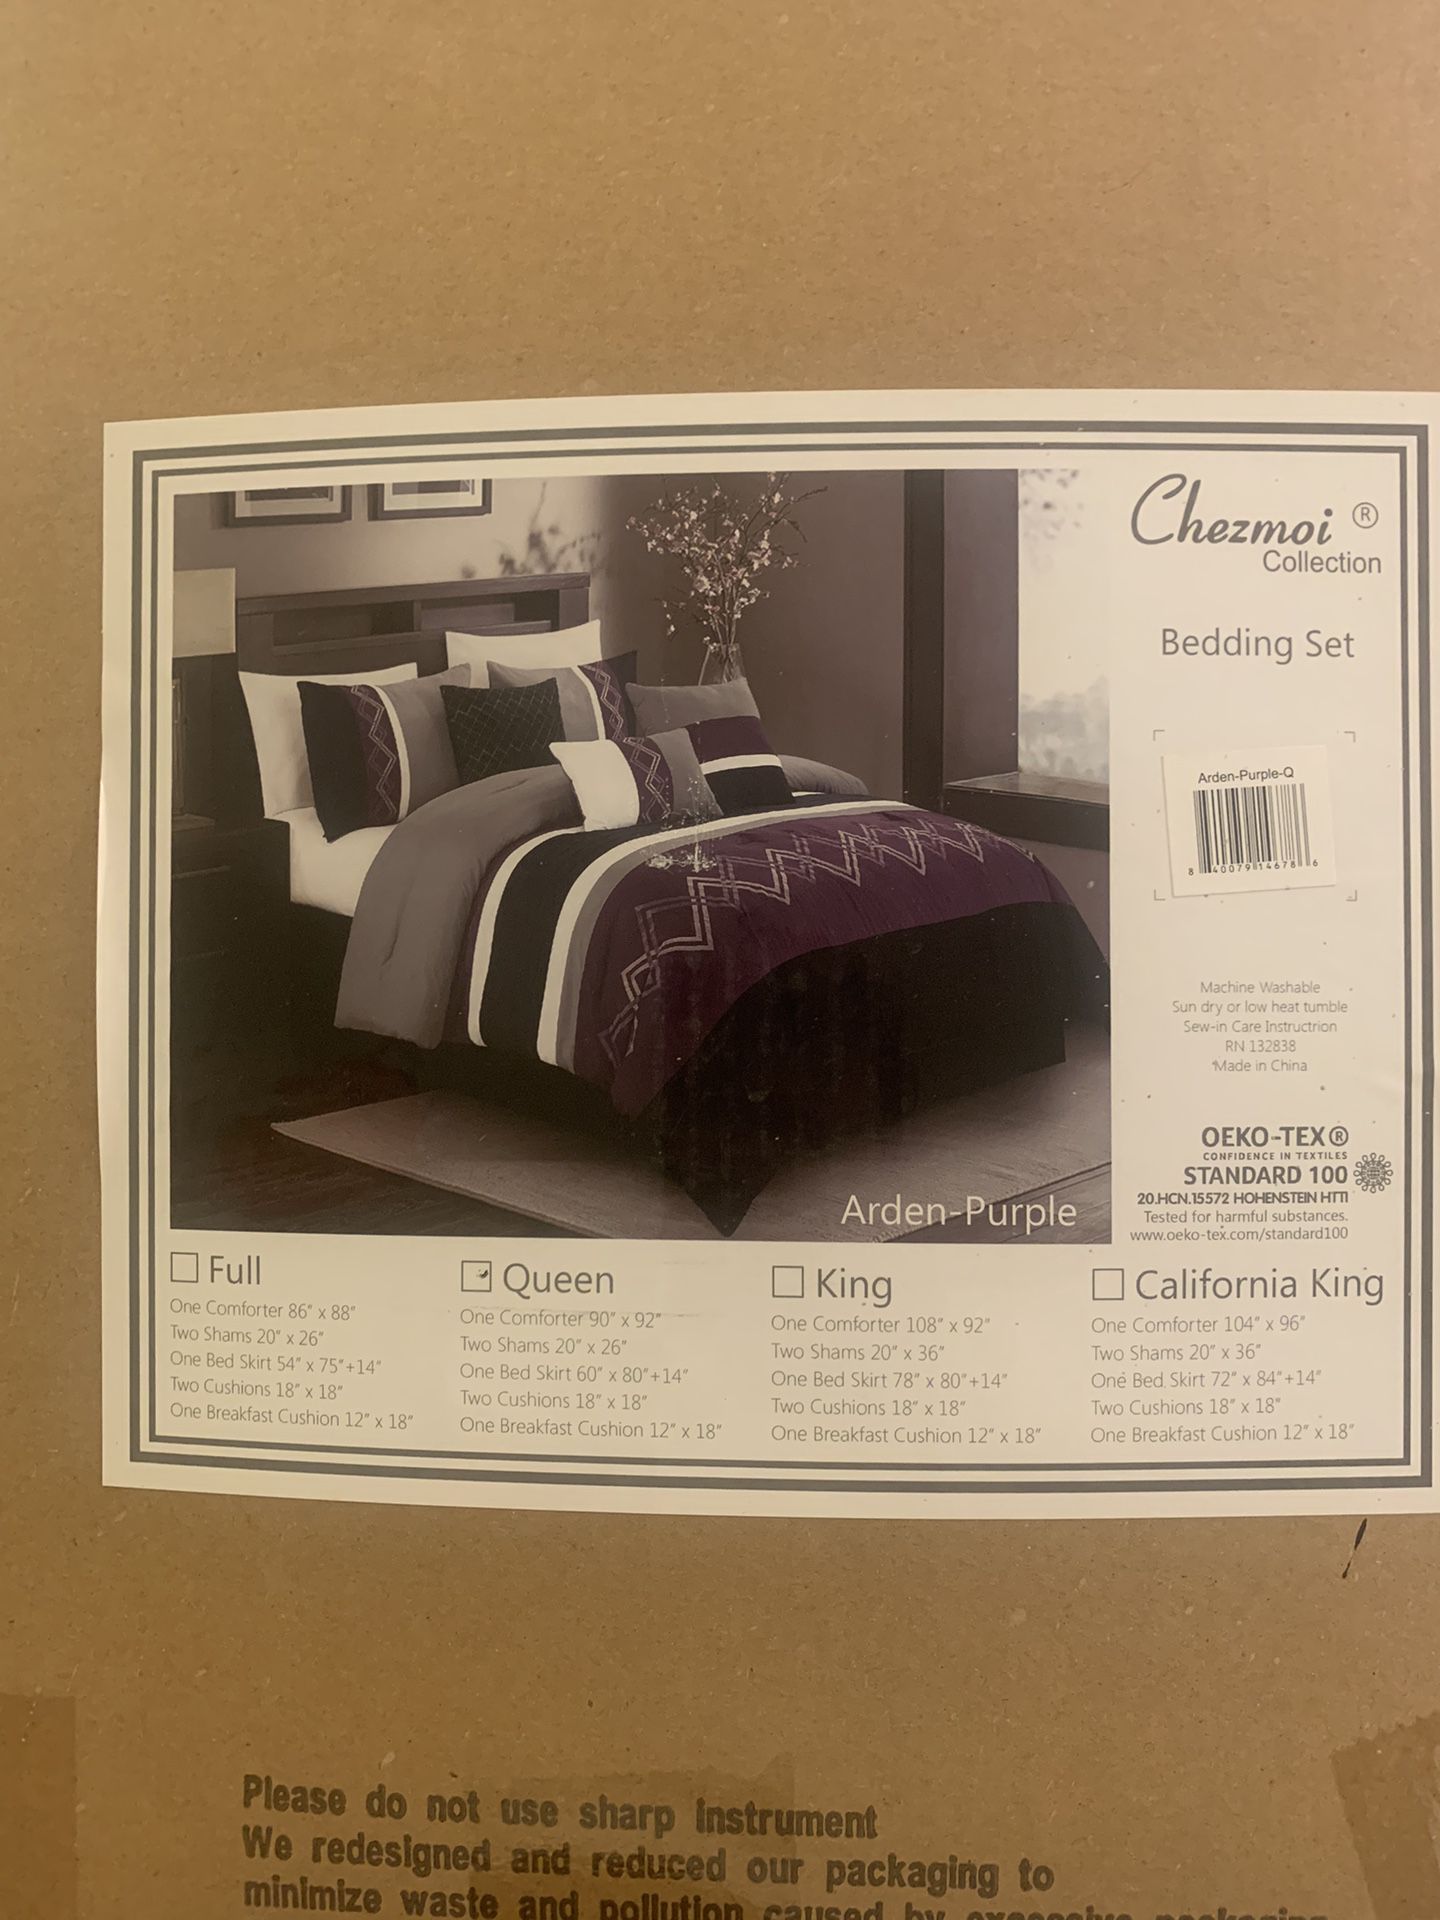 Chezmoi - Queen Bedding Set - Brand New